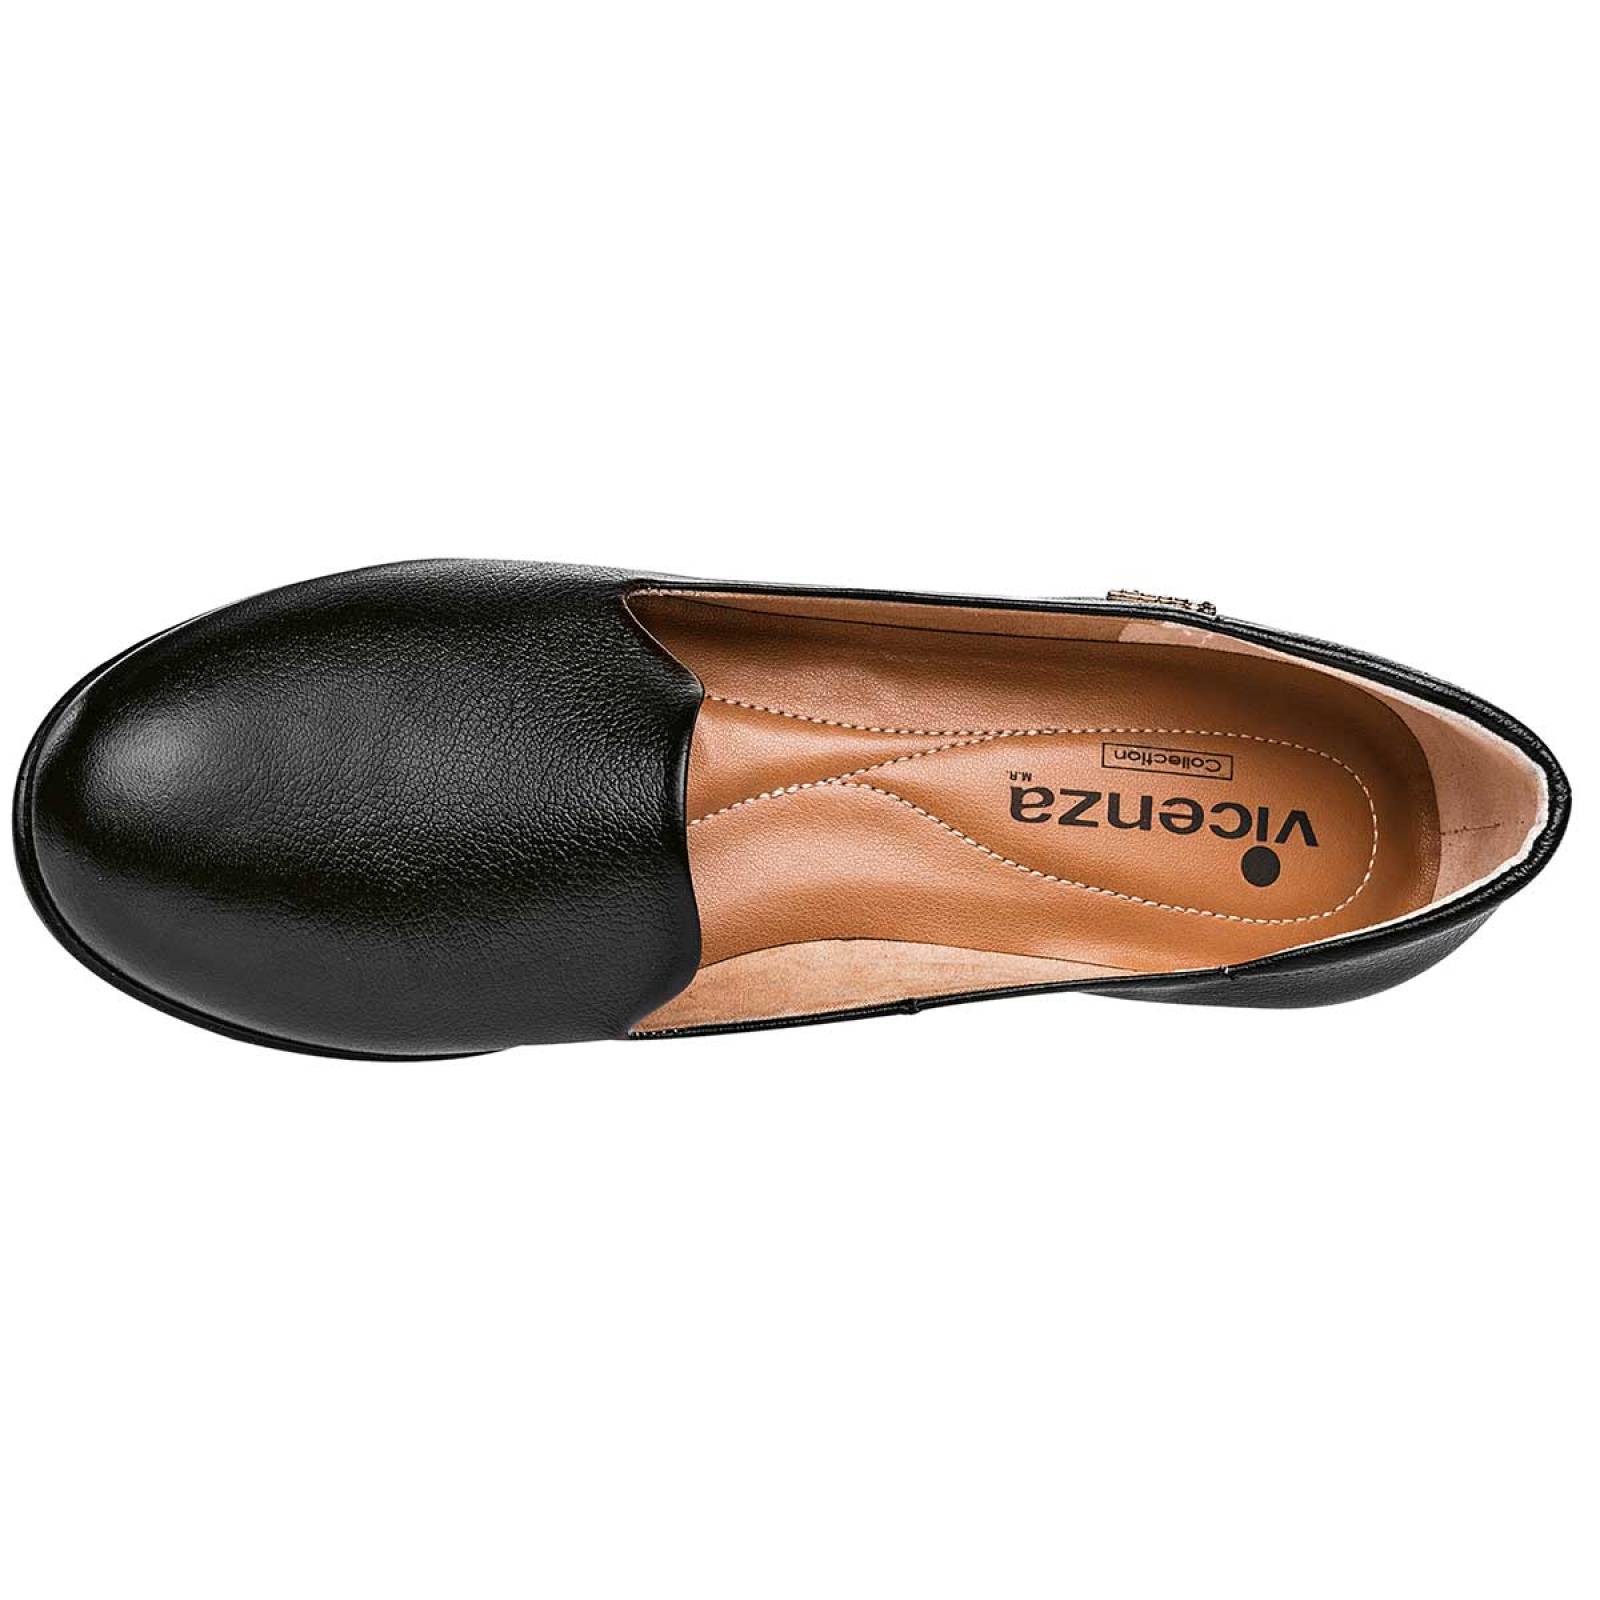 Vicenza Zapato Mujer Negro